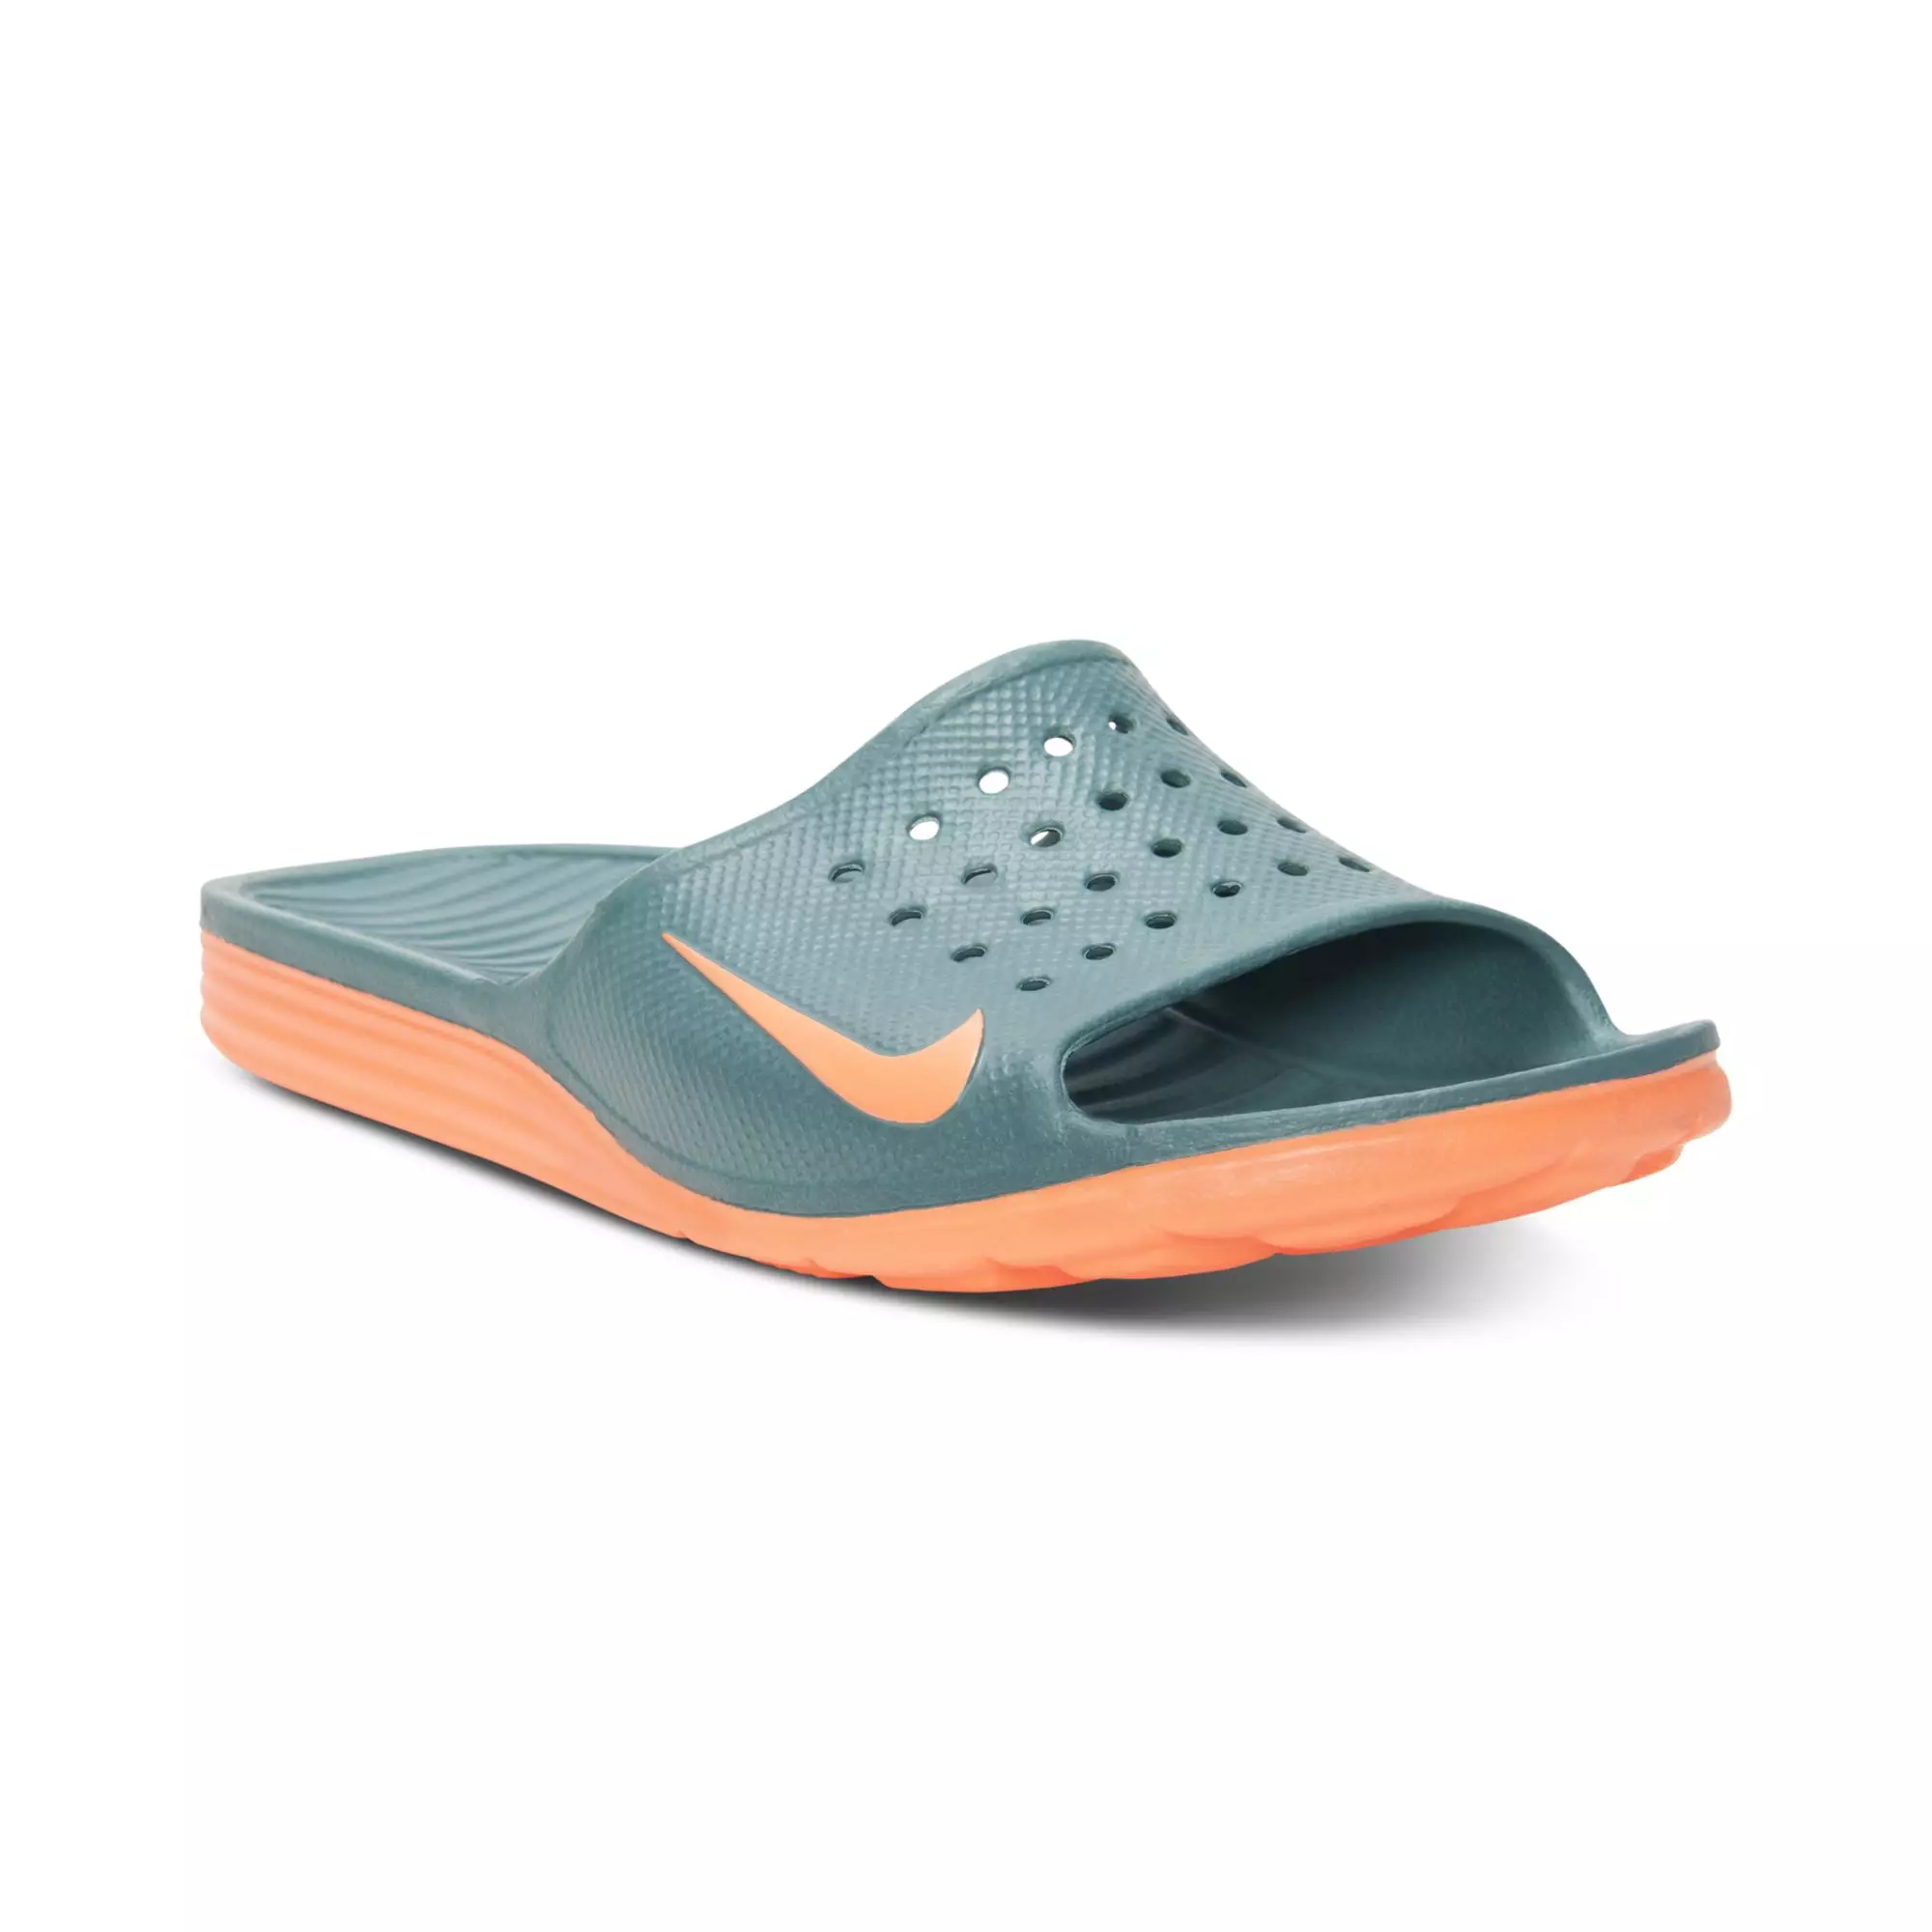 Nike slippers (lifoto tse 57): Mabone a basali 